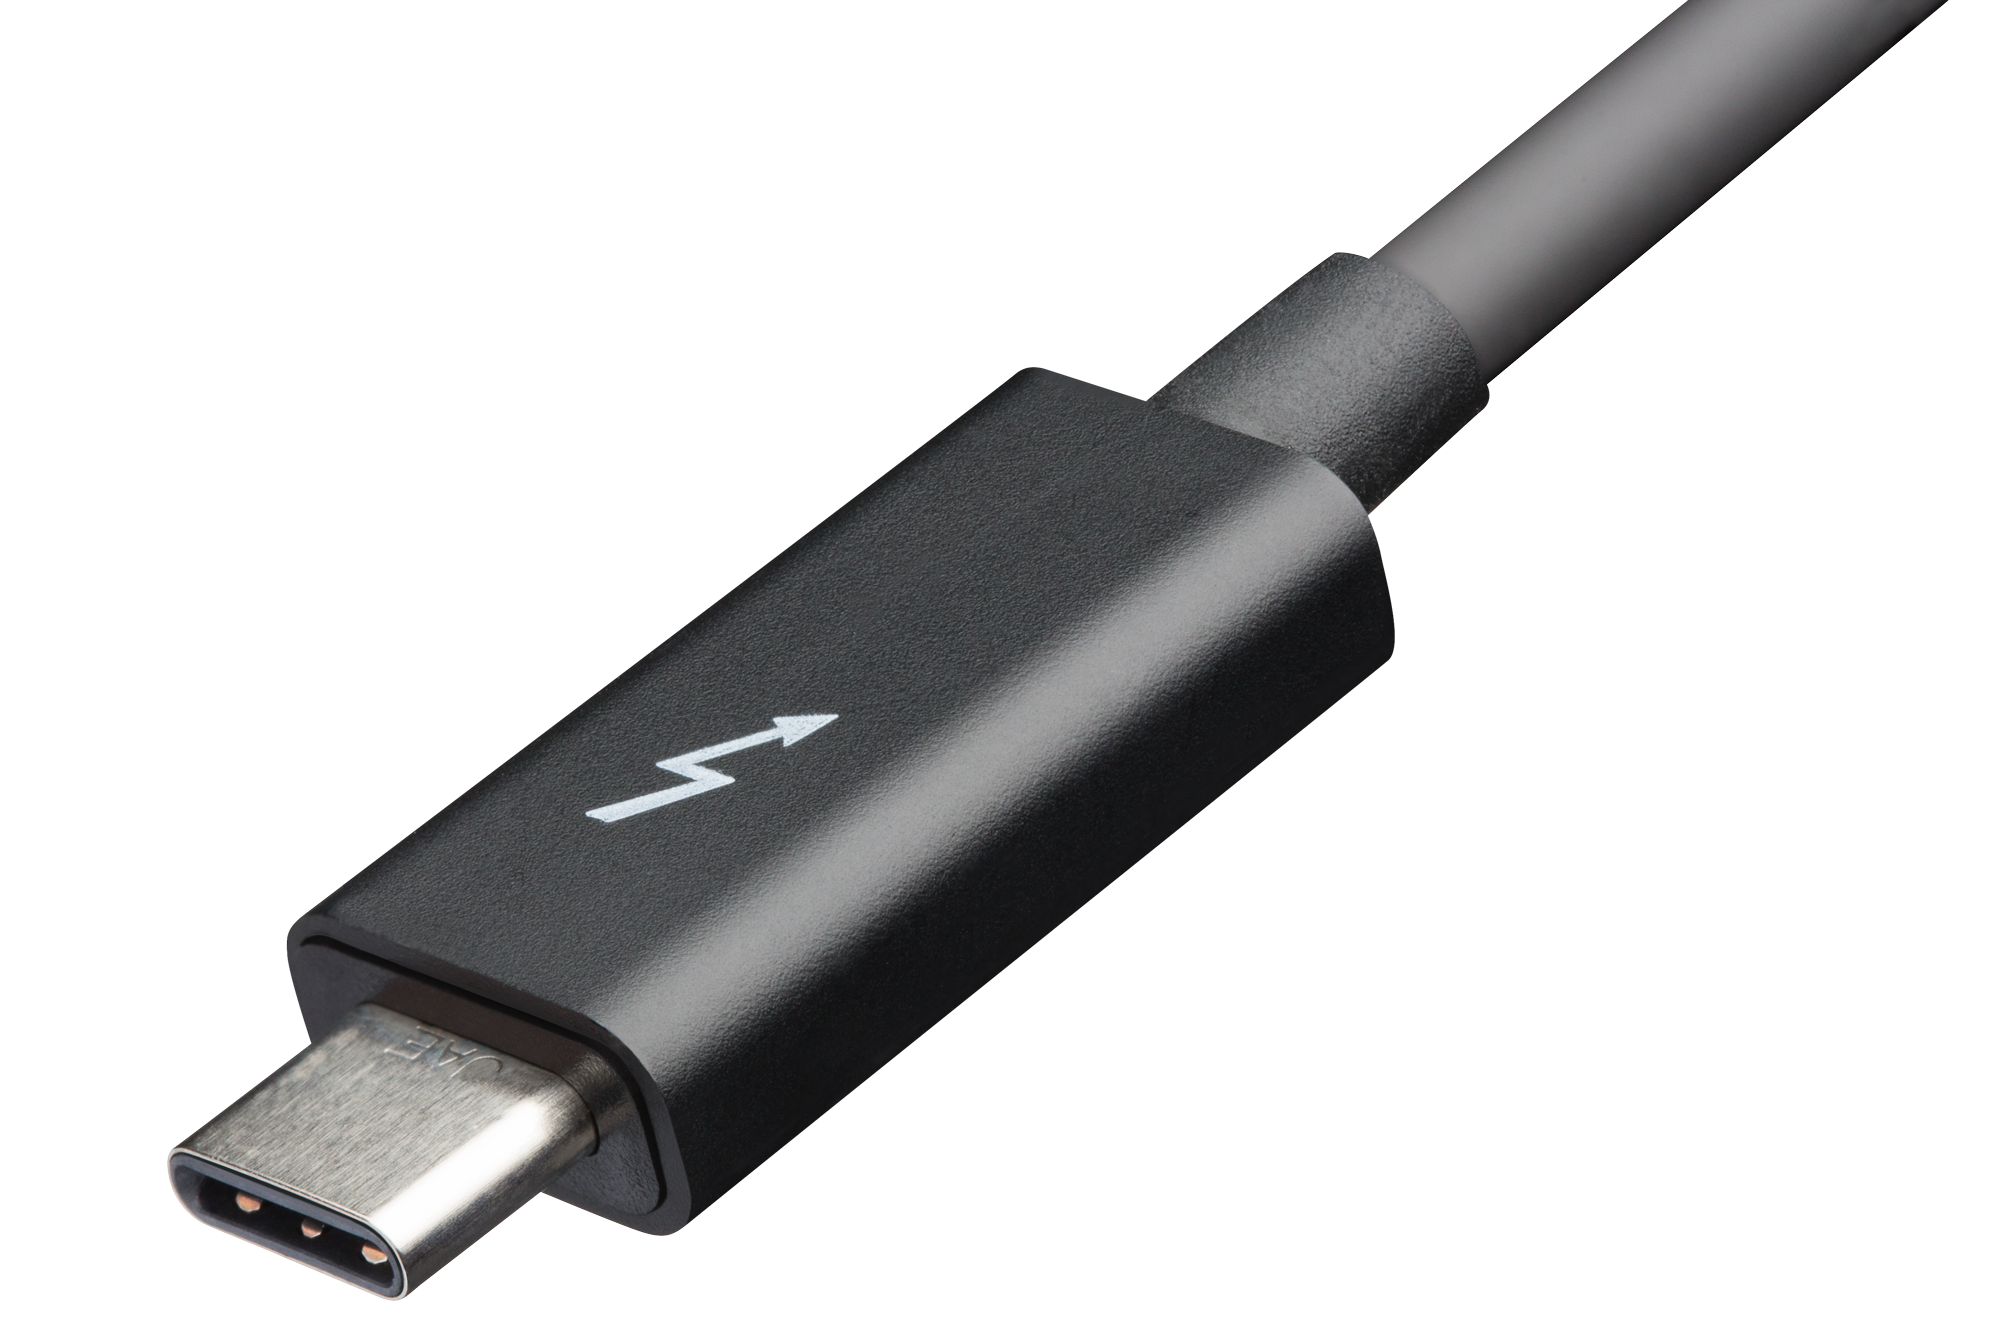 thunderbolt port to usb 3.0 & esata sata hard disk drive adapter cable for mac